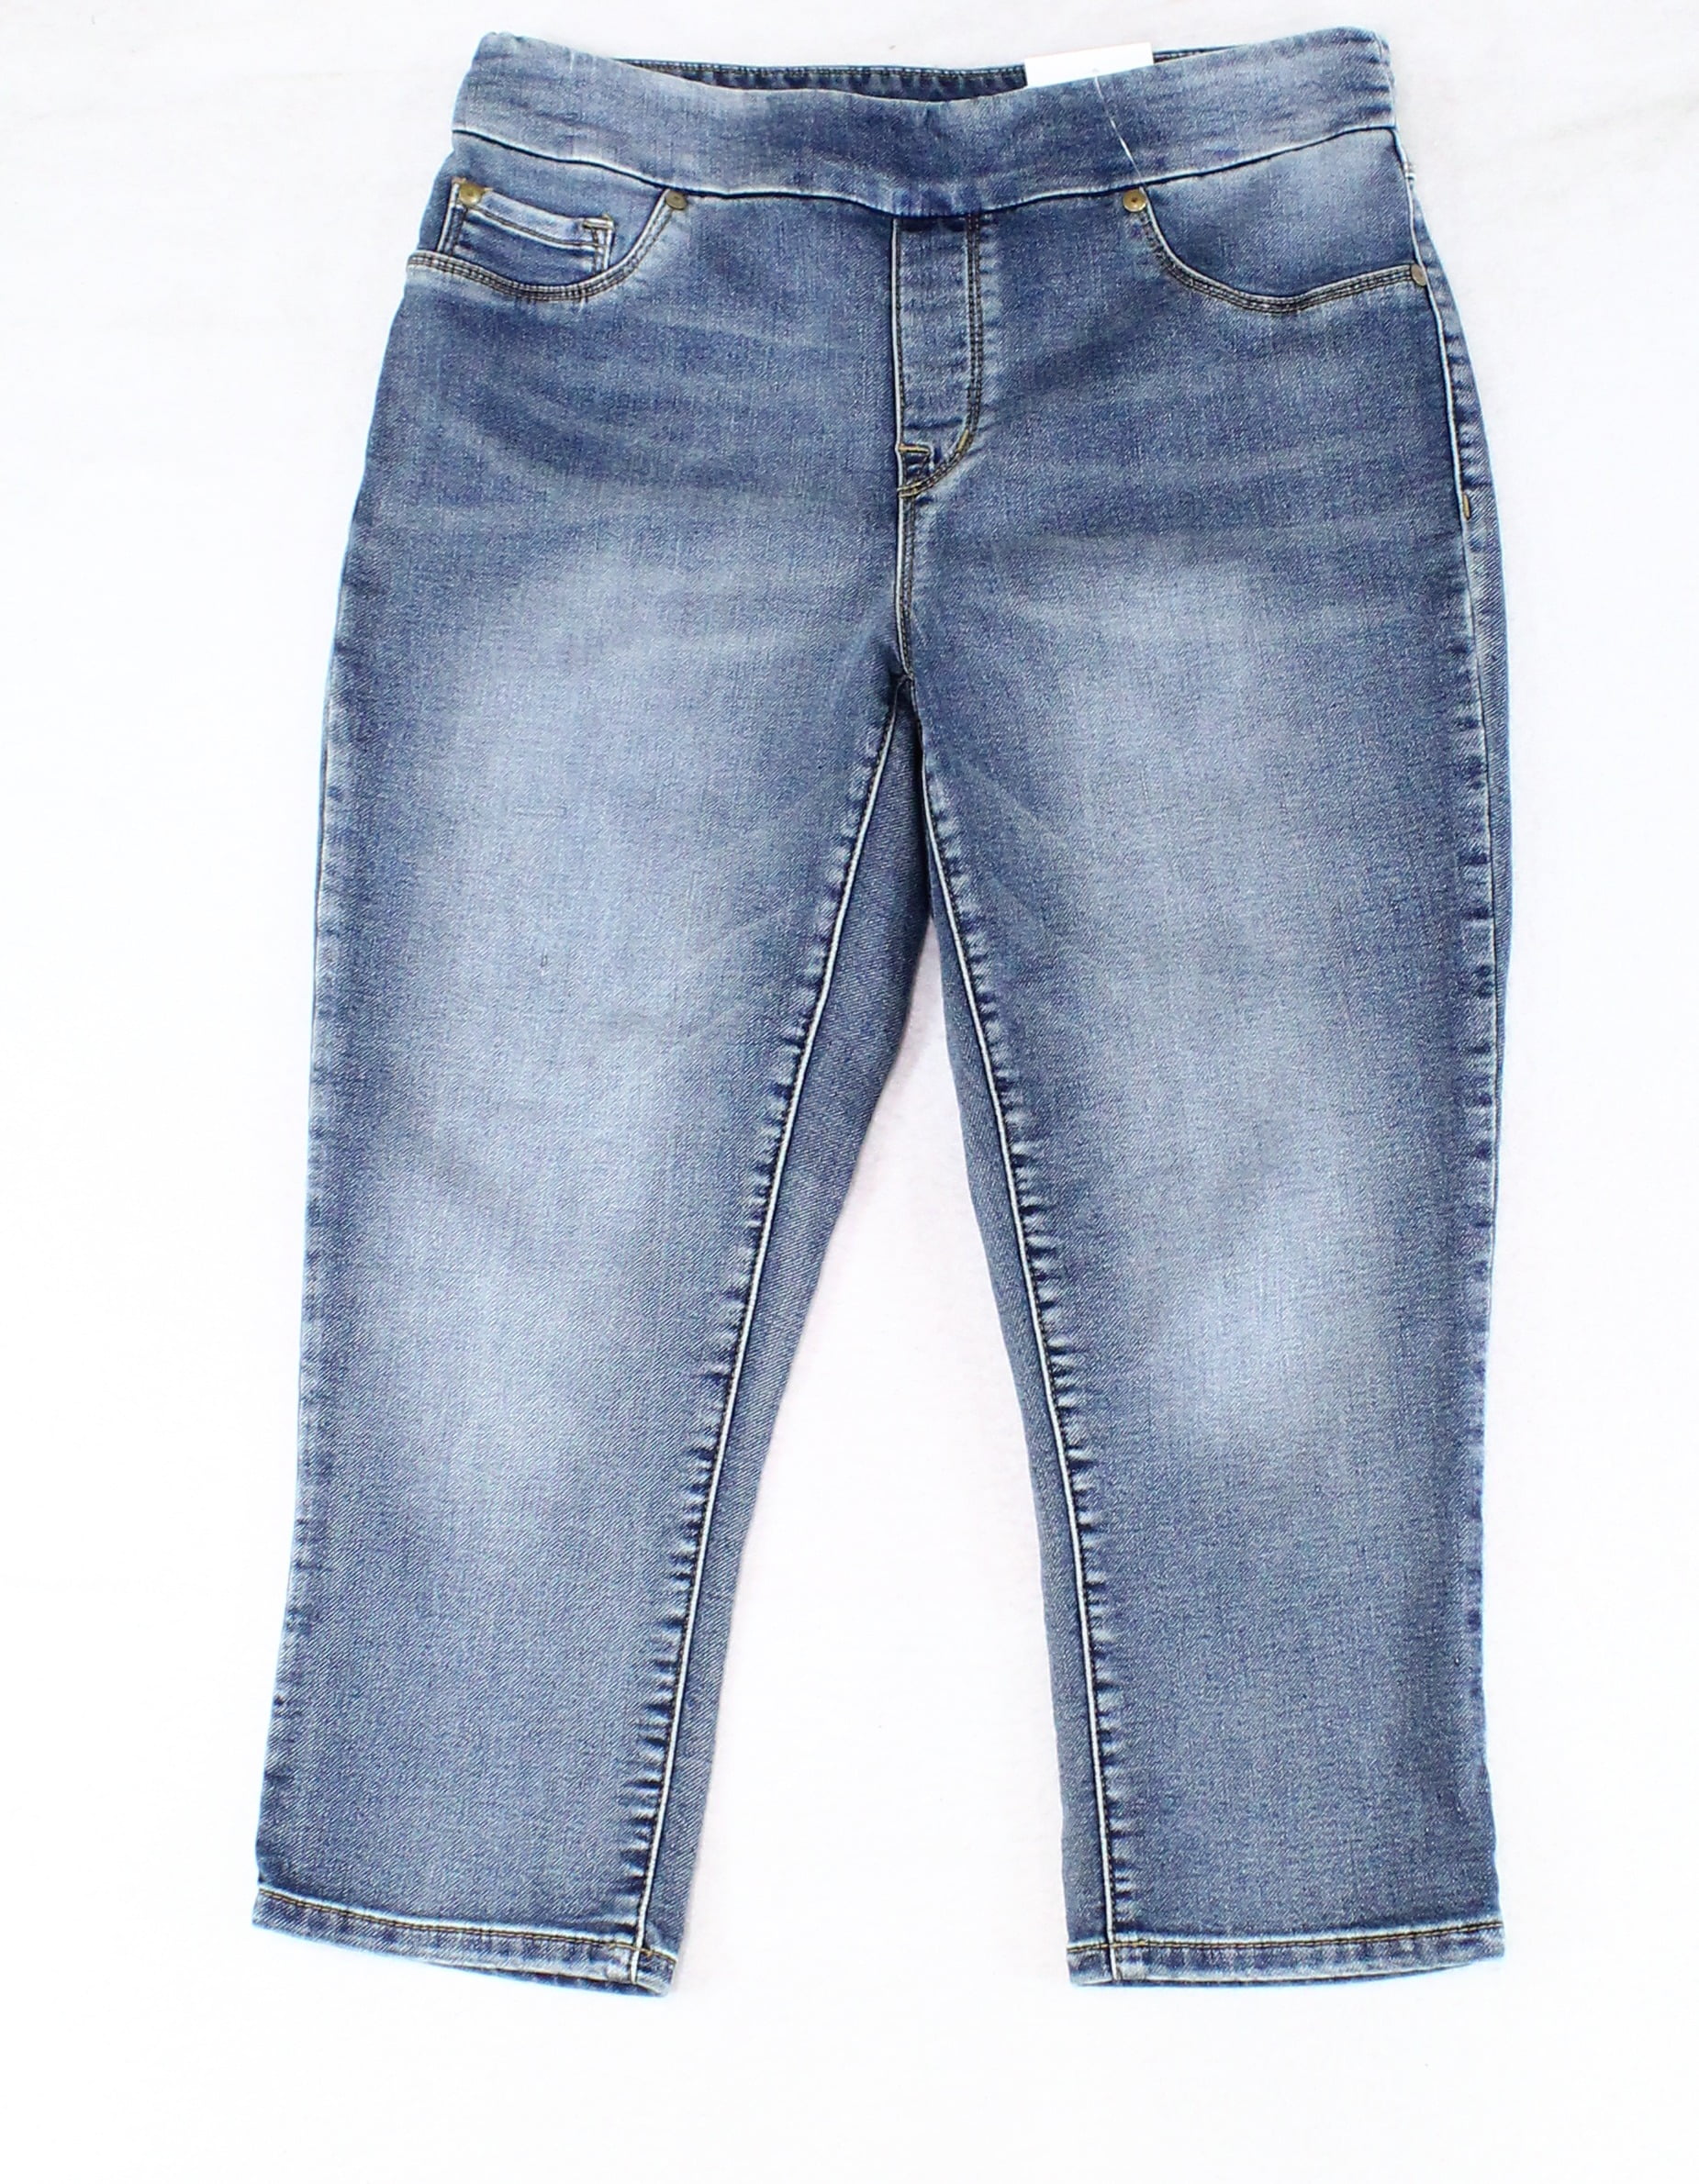 Designer Brand Jeans - Womens Jeans Stretch Capri Pull-On Slim 8 ...